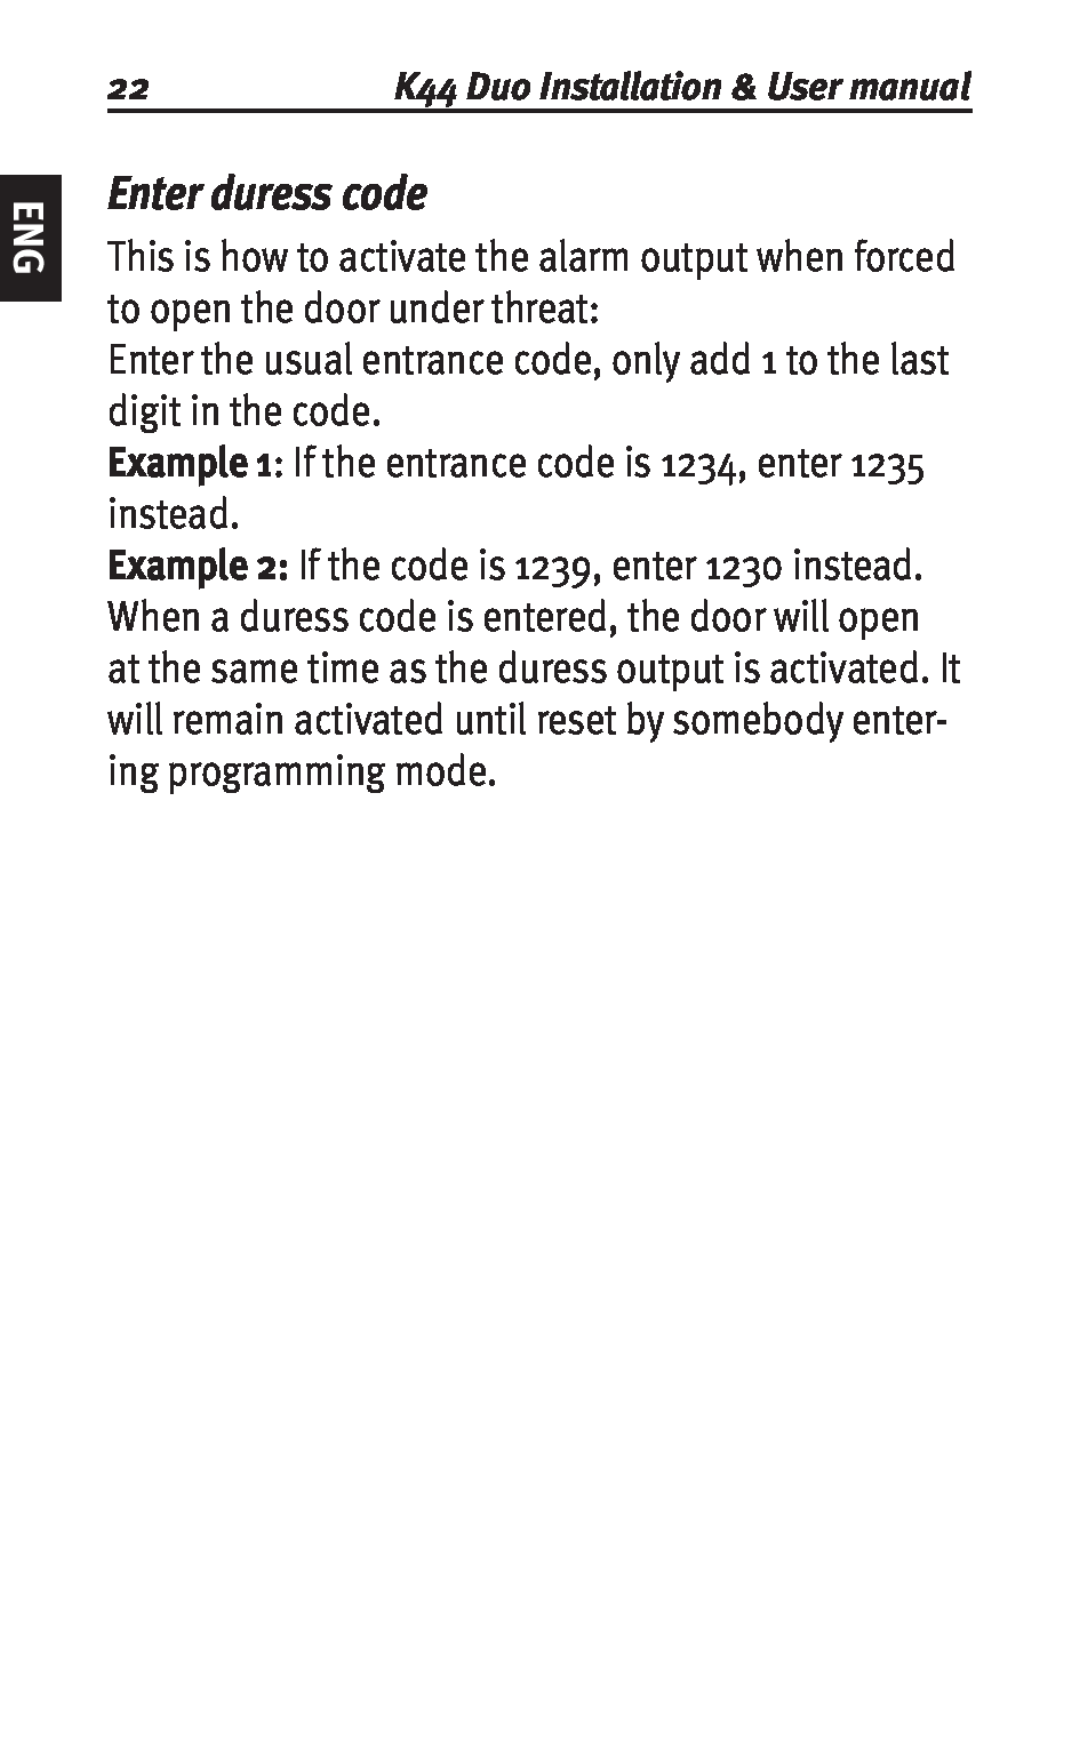 Siemens K44 user manual Enter duress code 